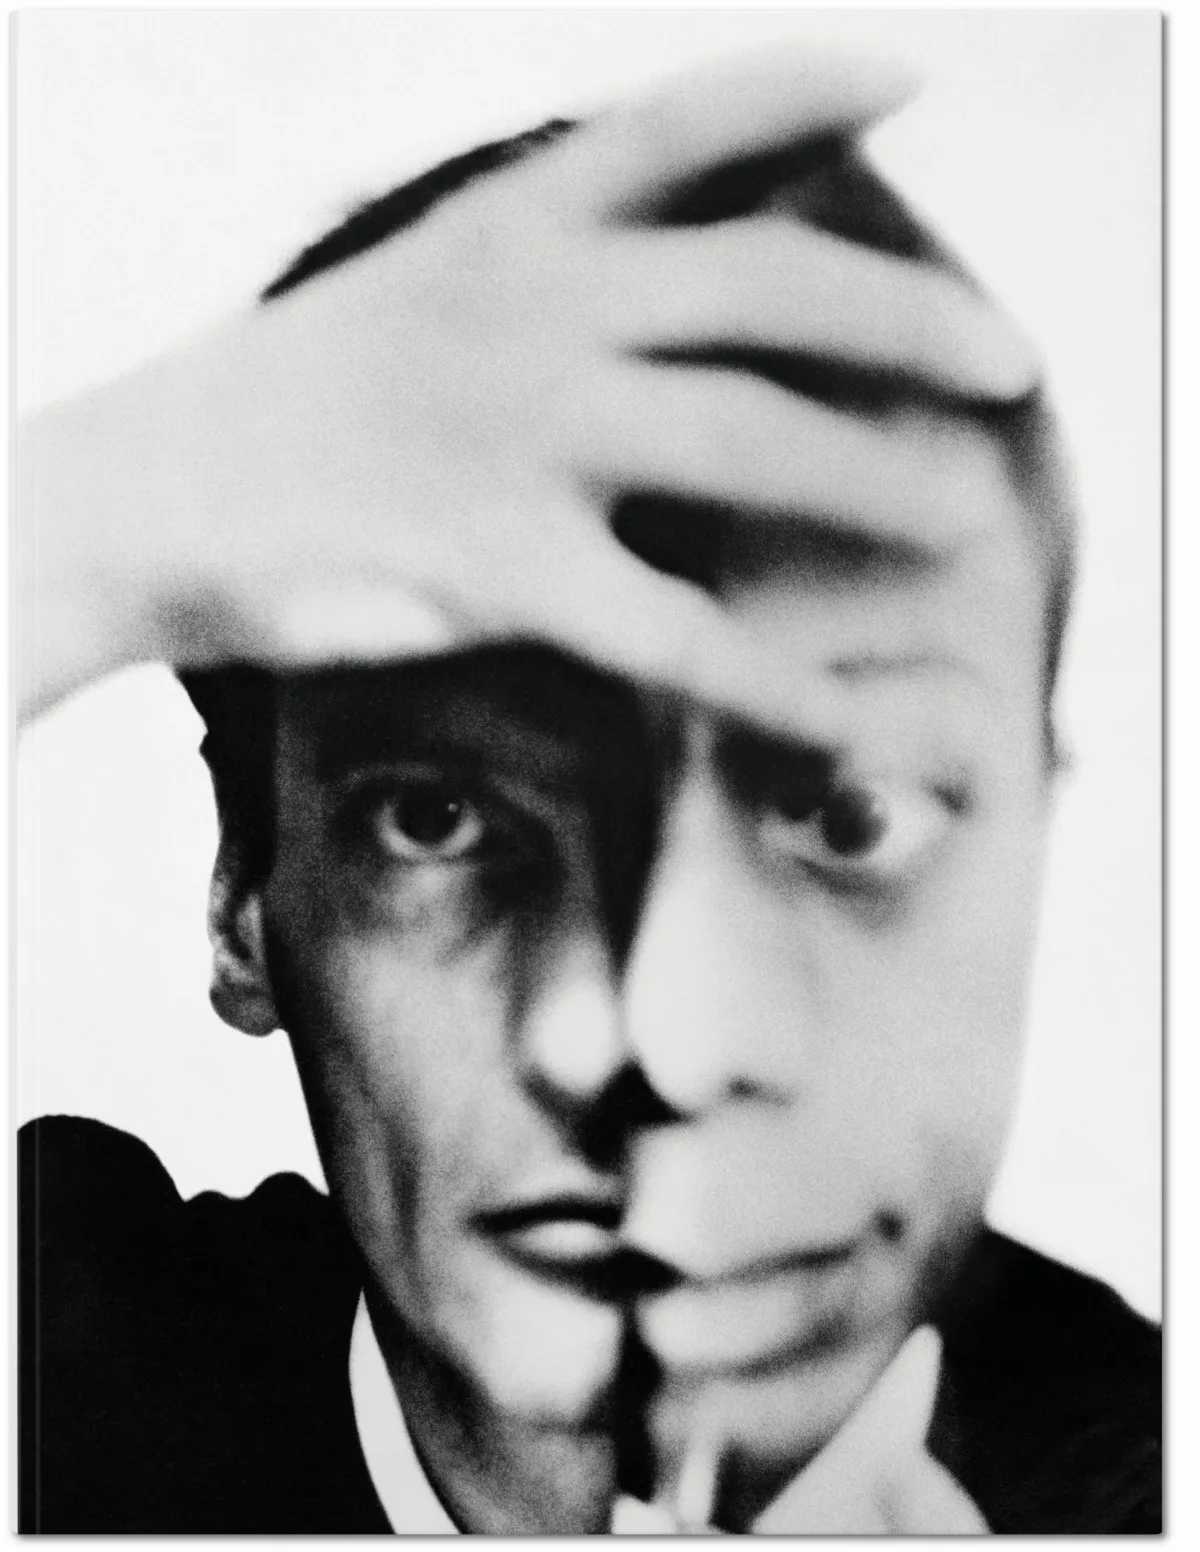 TASCHEN Books: Richard Avedon. James Baldwin. Nothing Personal